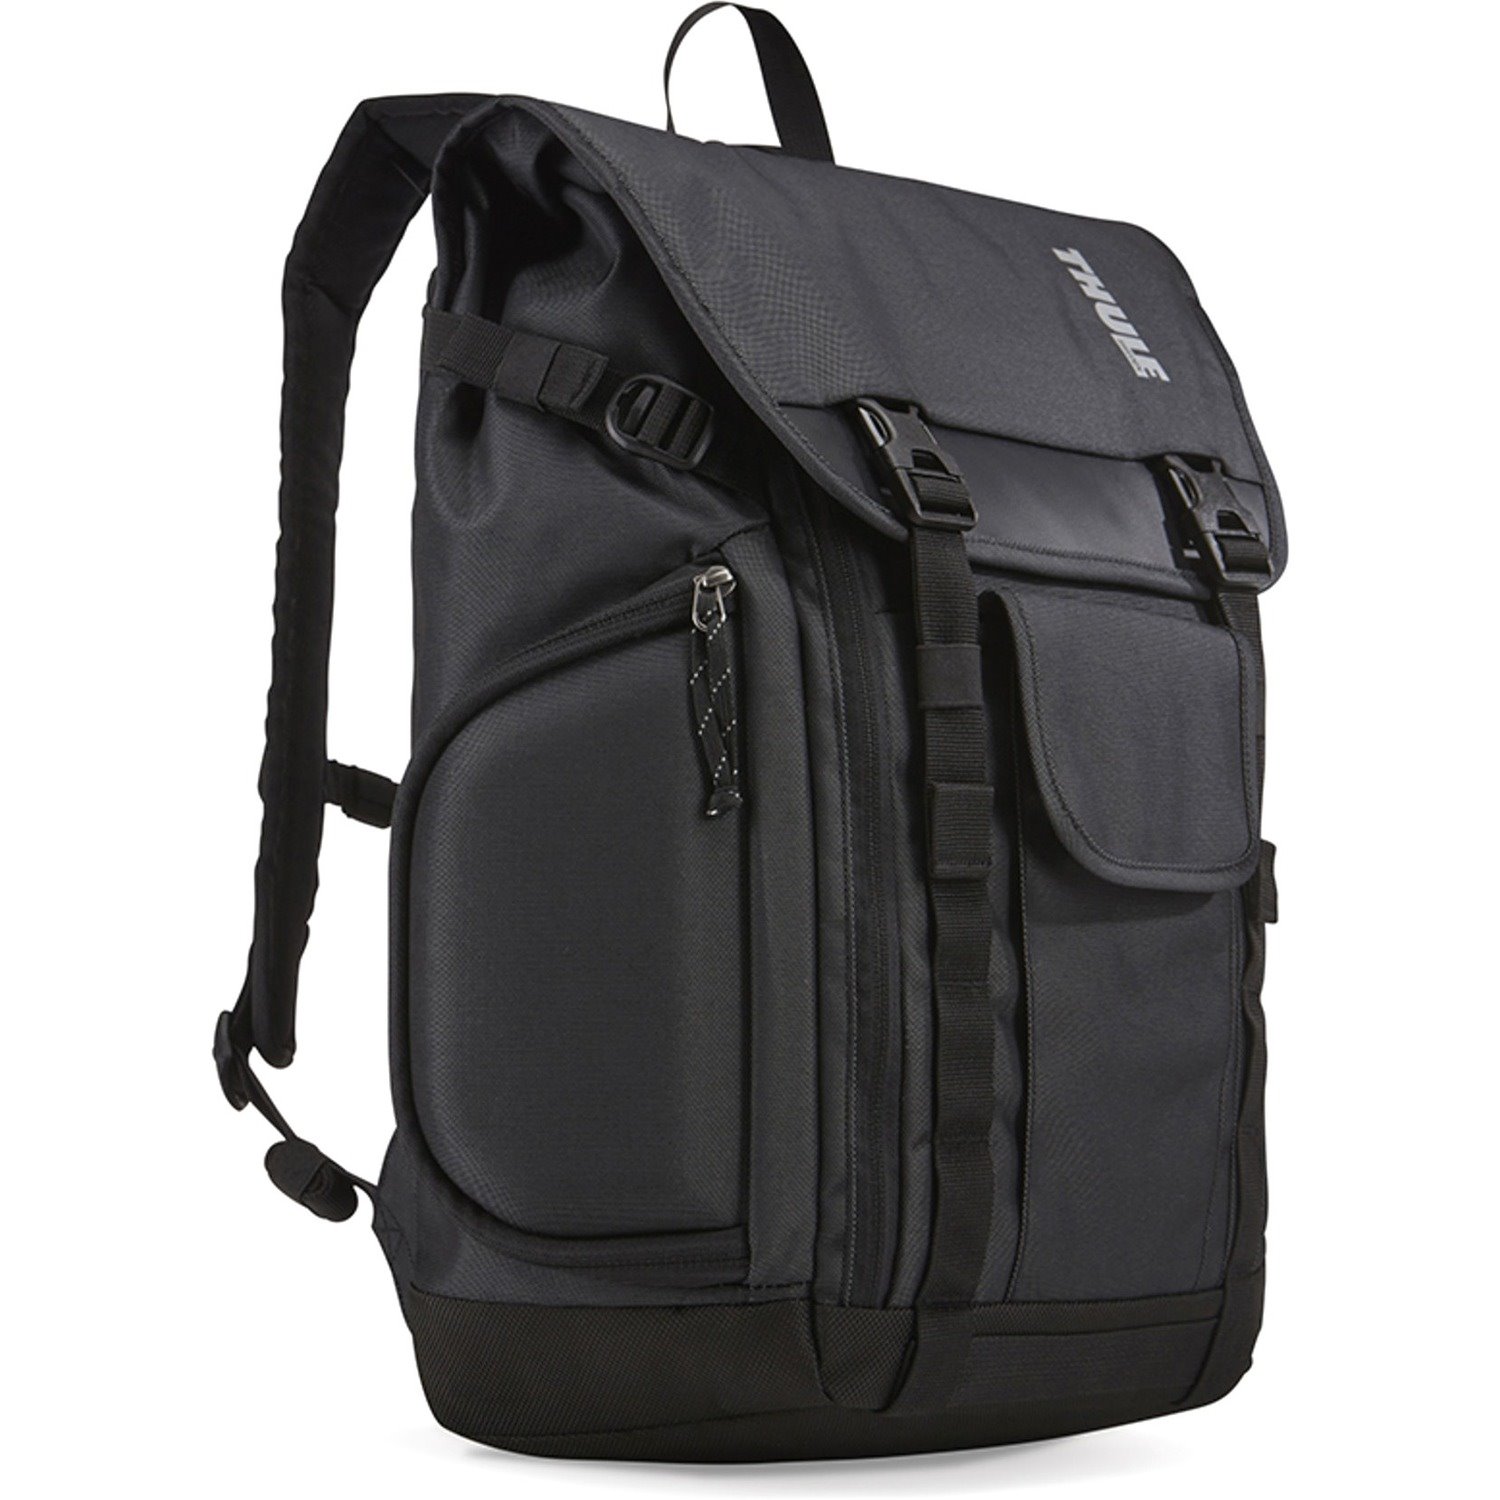 Thule Subterra TSDP115 Carrying Case (Backpack) for 10.1" to 15" Apple iPad MacBook, Notebook, Tablet PC - Dark Shadow